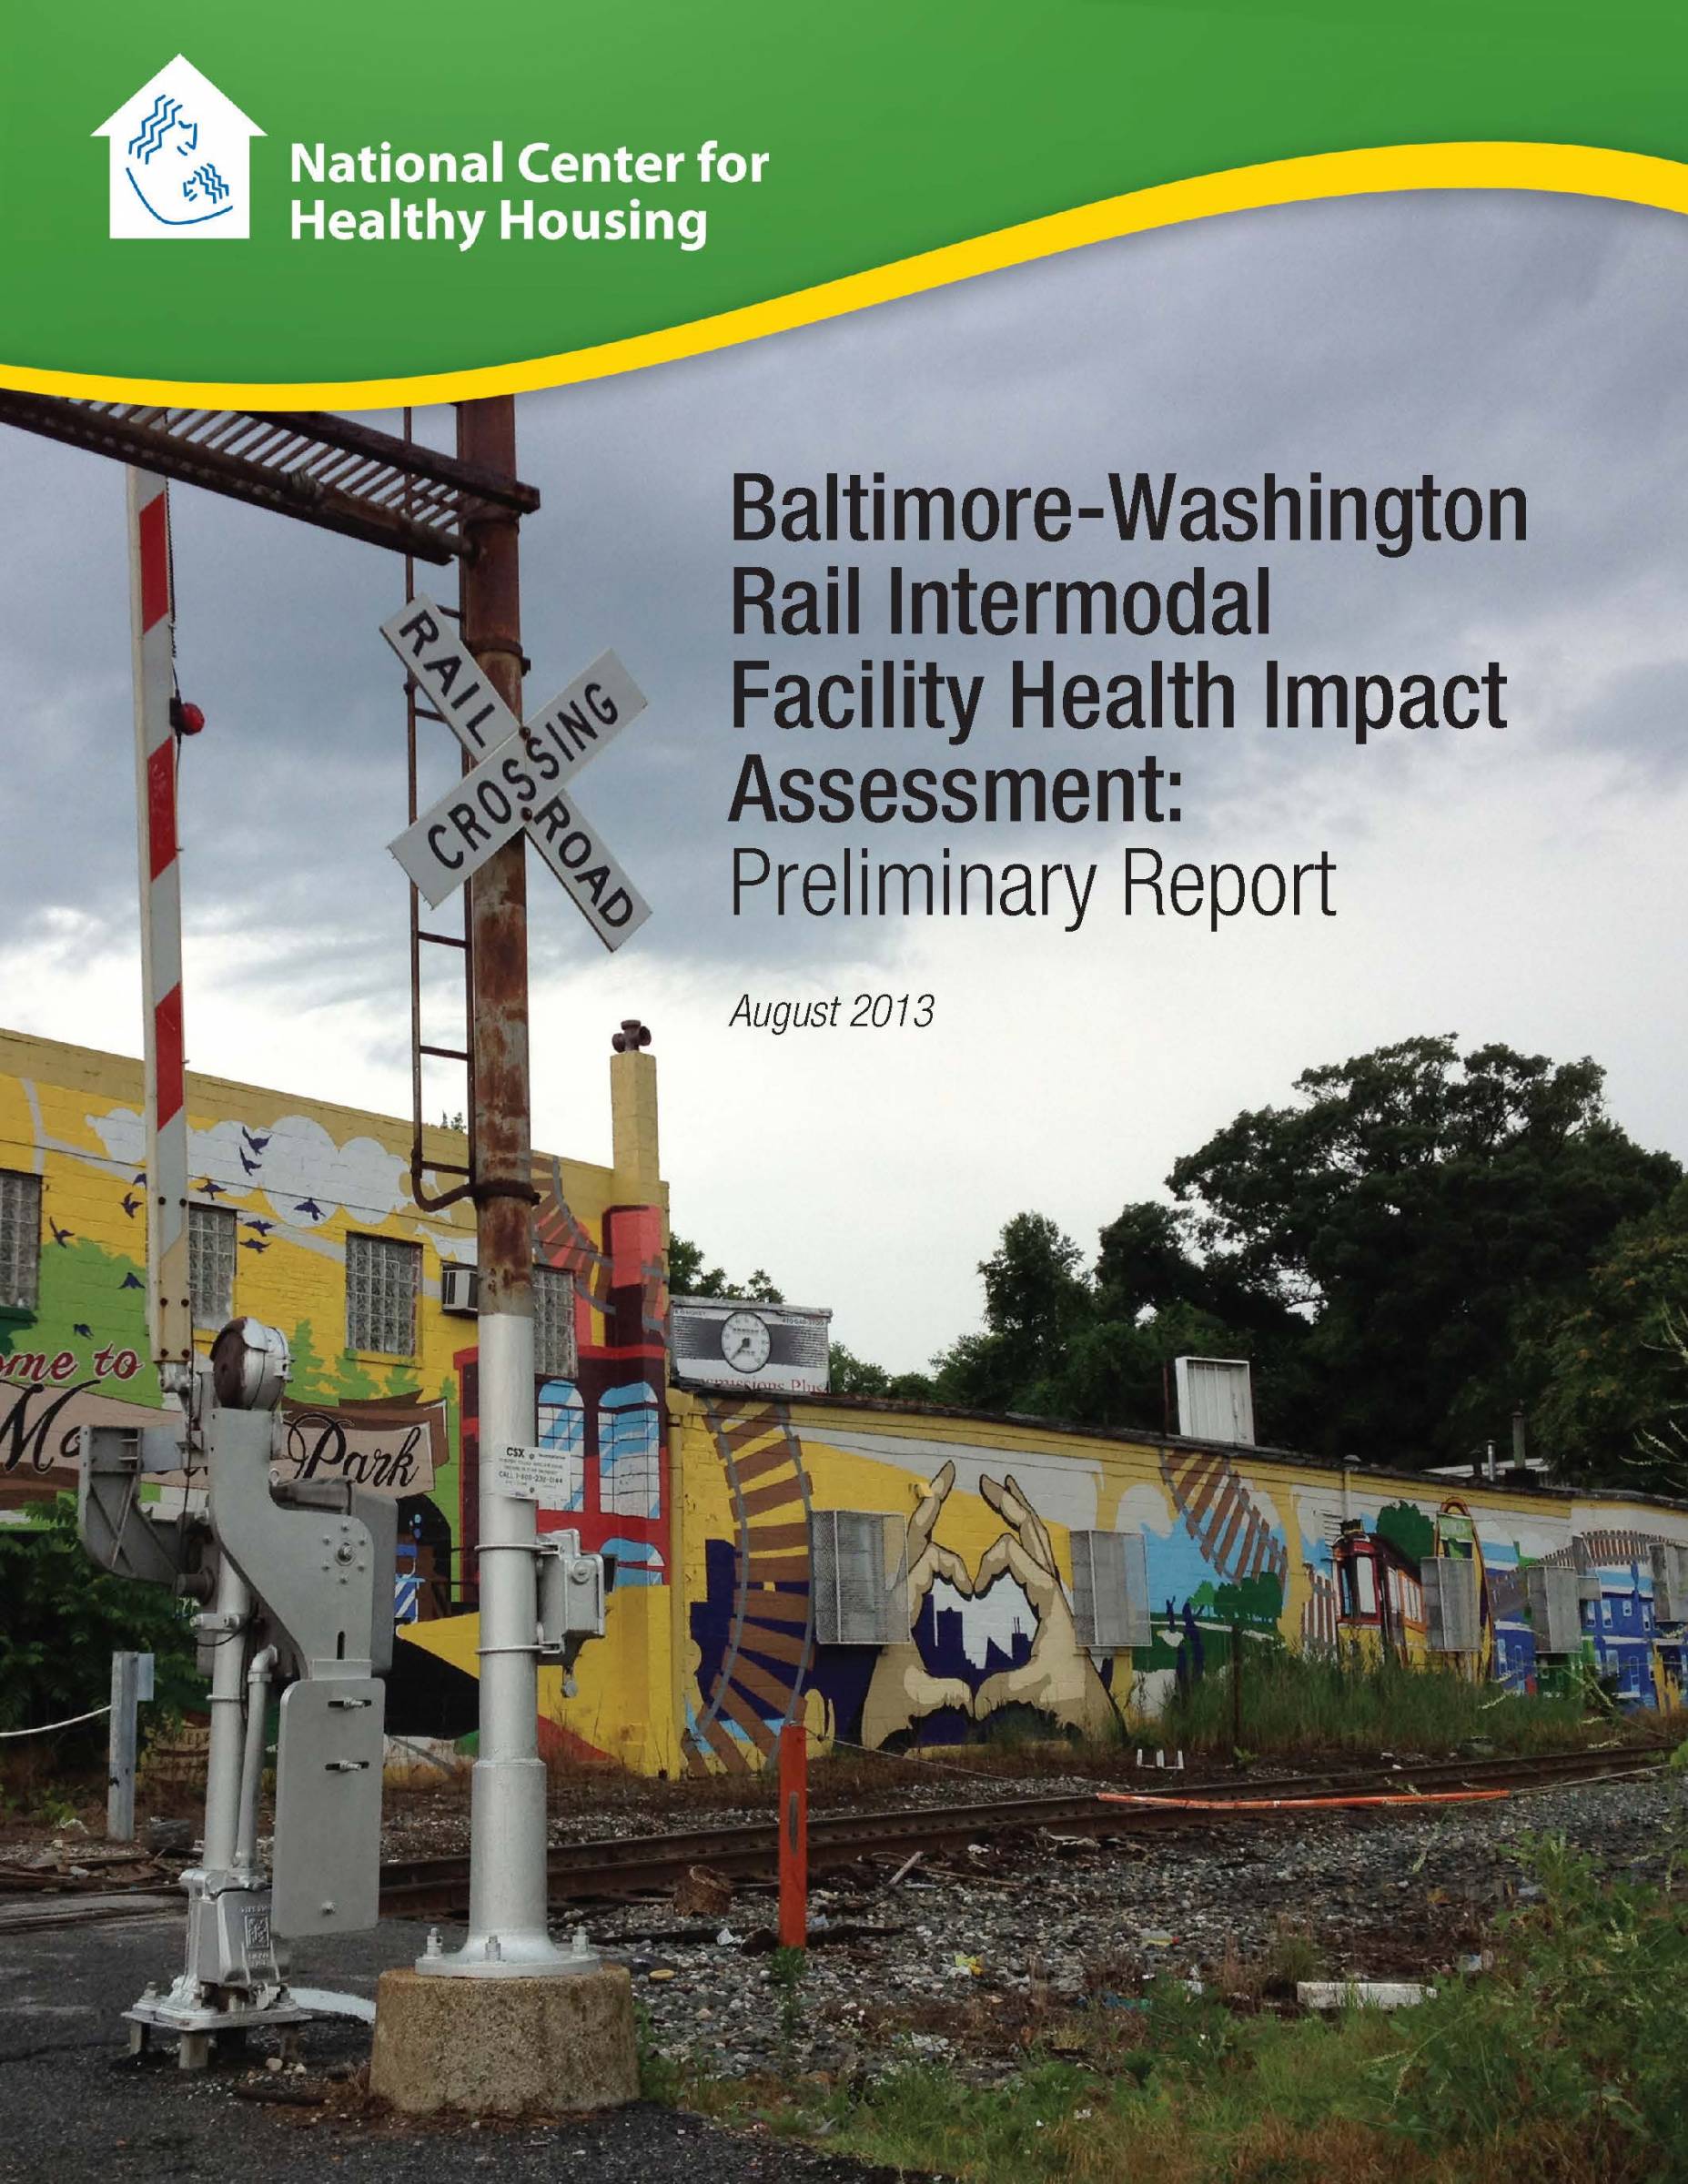 Baltimore-Washington Rail Intermodal Facility Health Impact Assessment: Preliminary Report